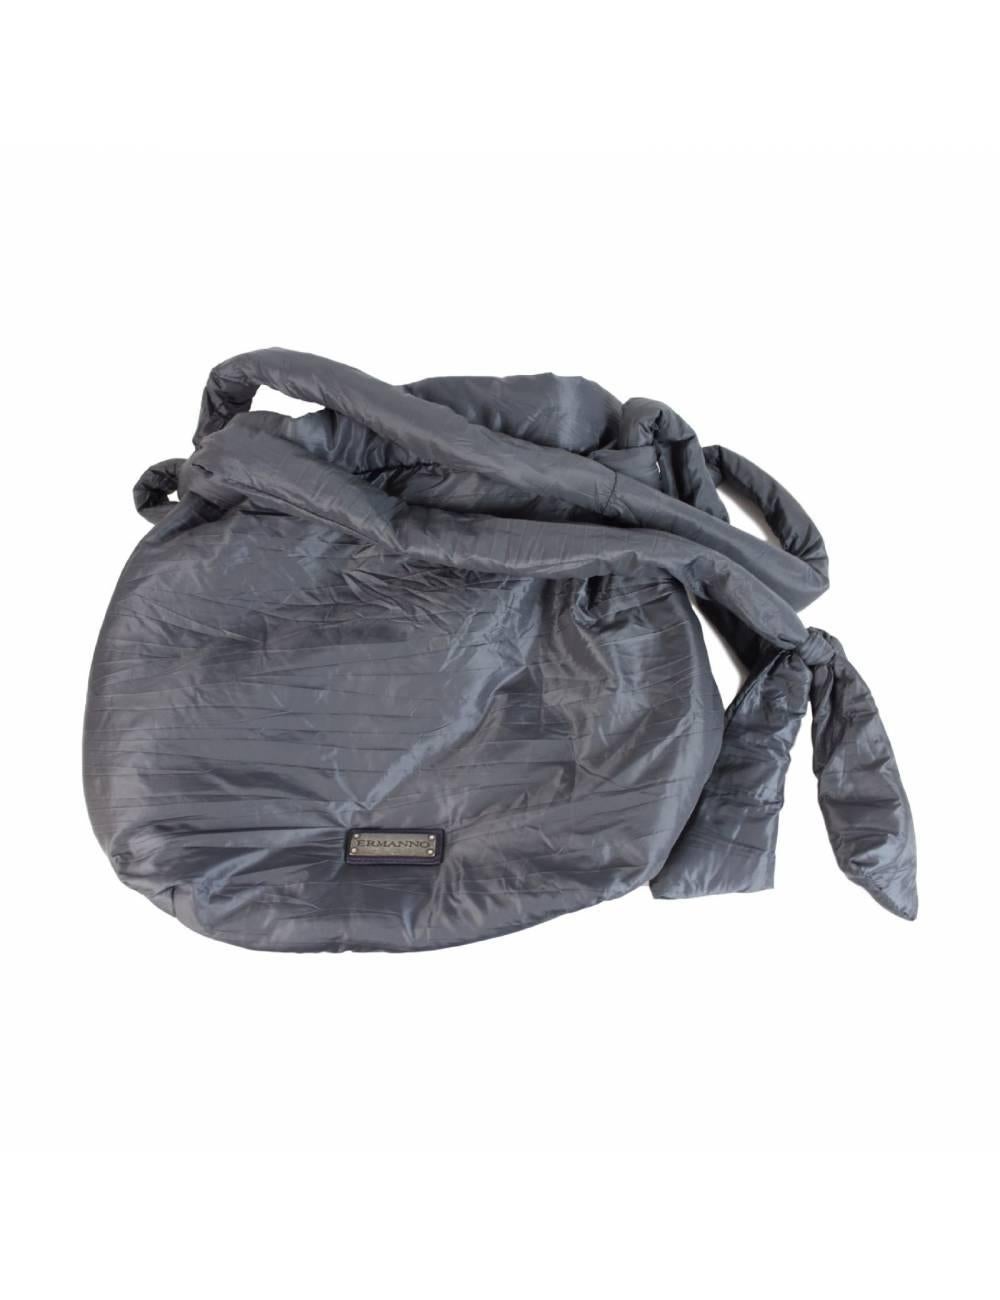 Women's Ermanoo Scervino Gray Soft Tote Shopping Bag